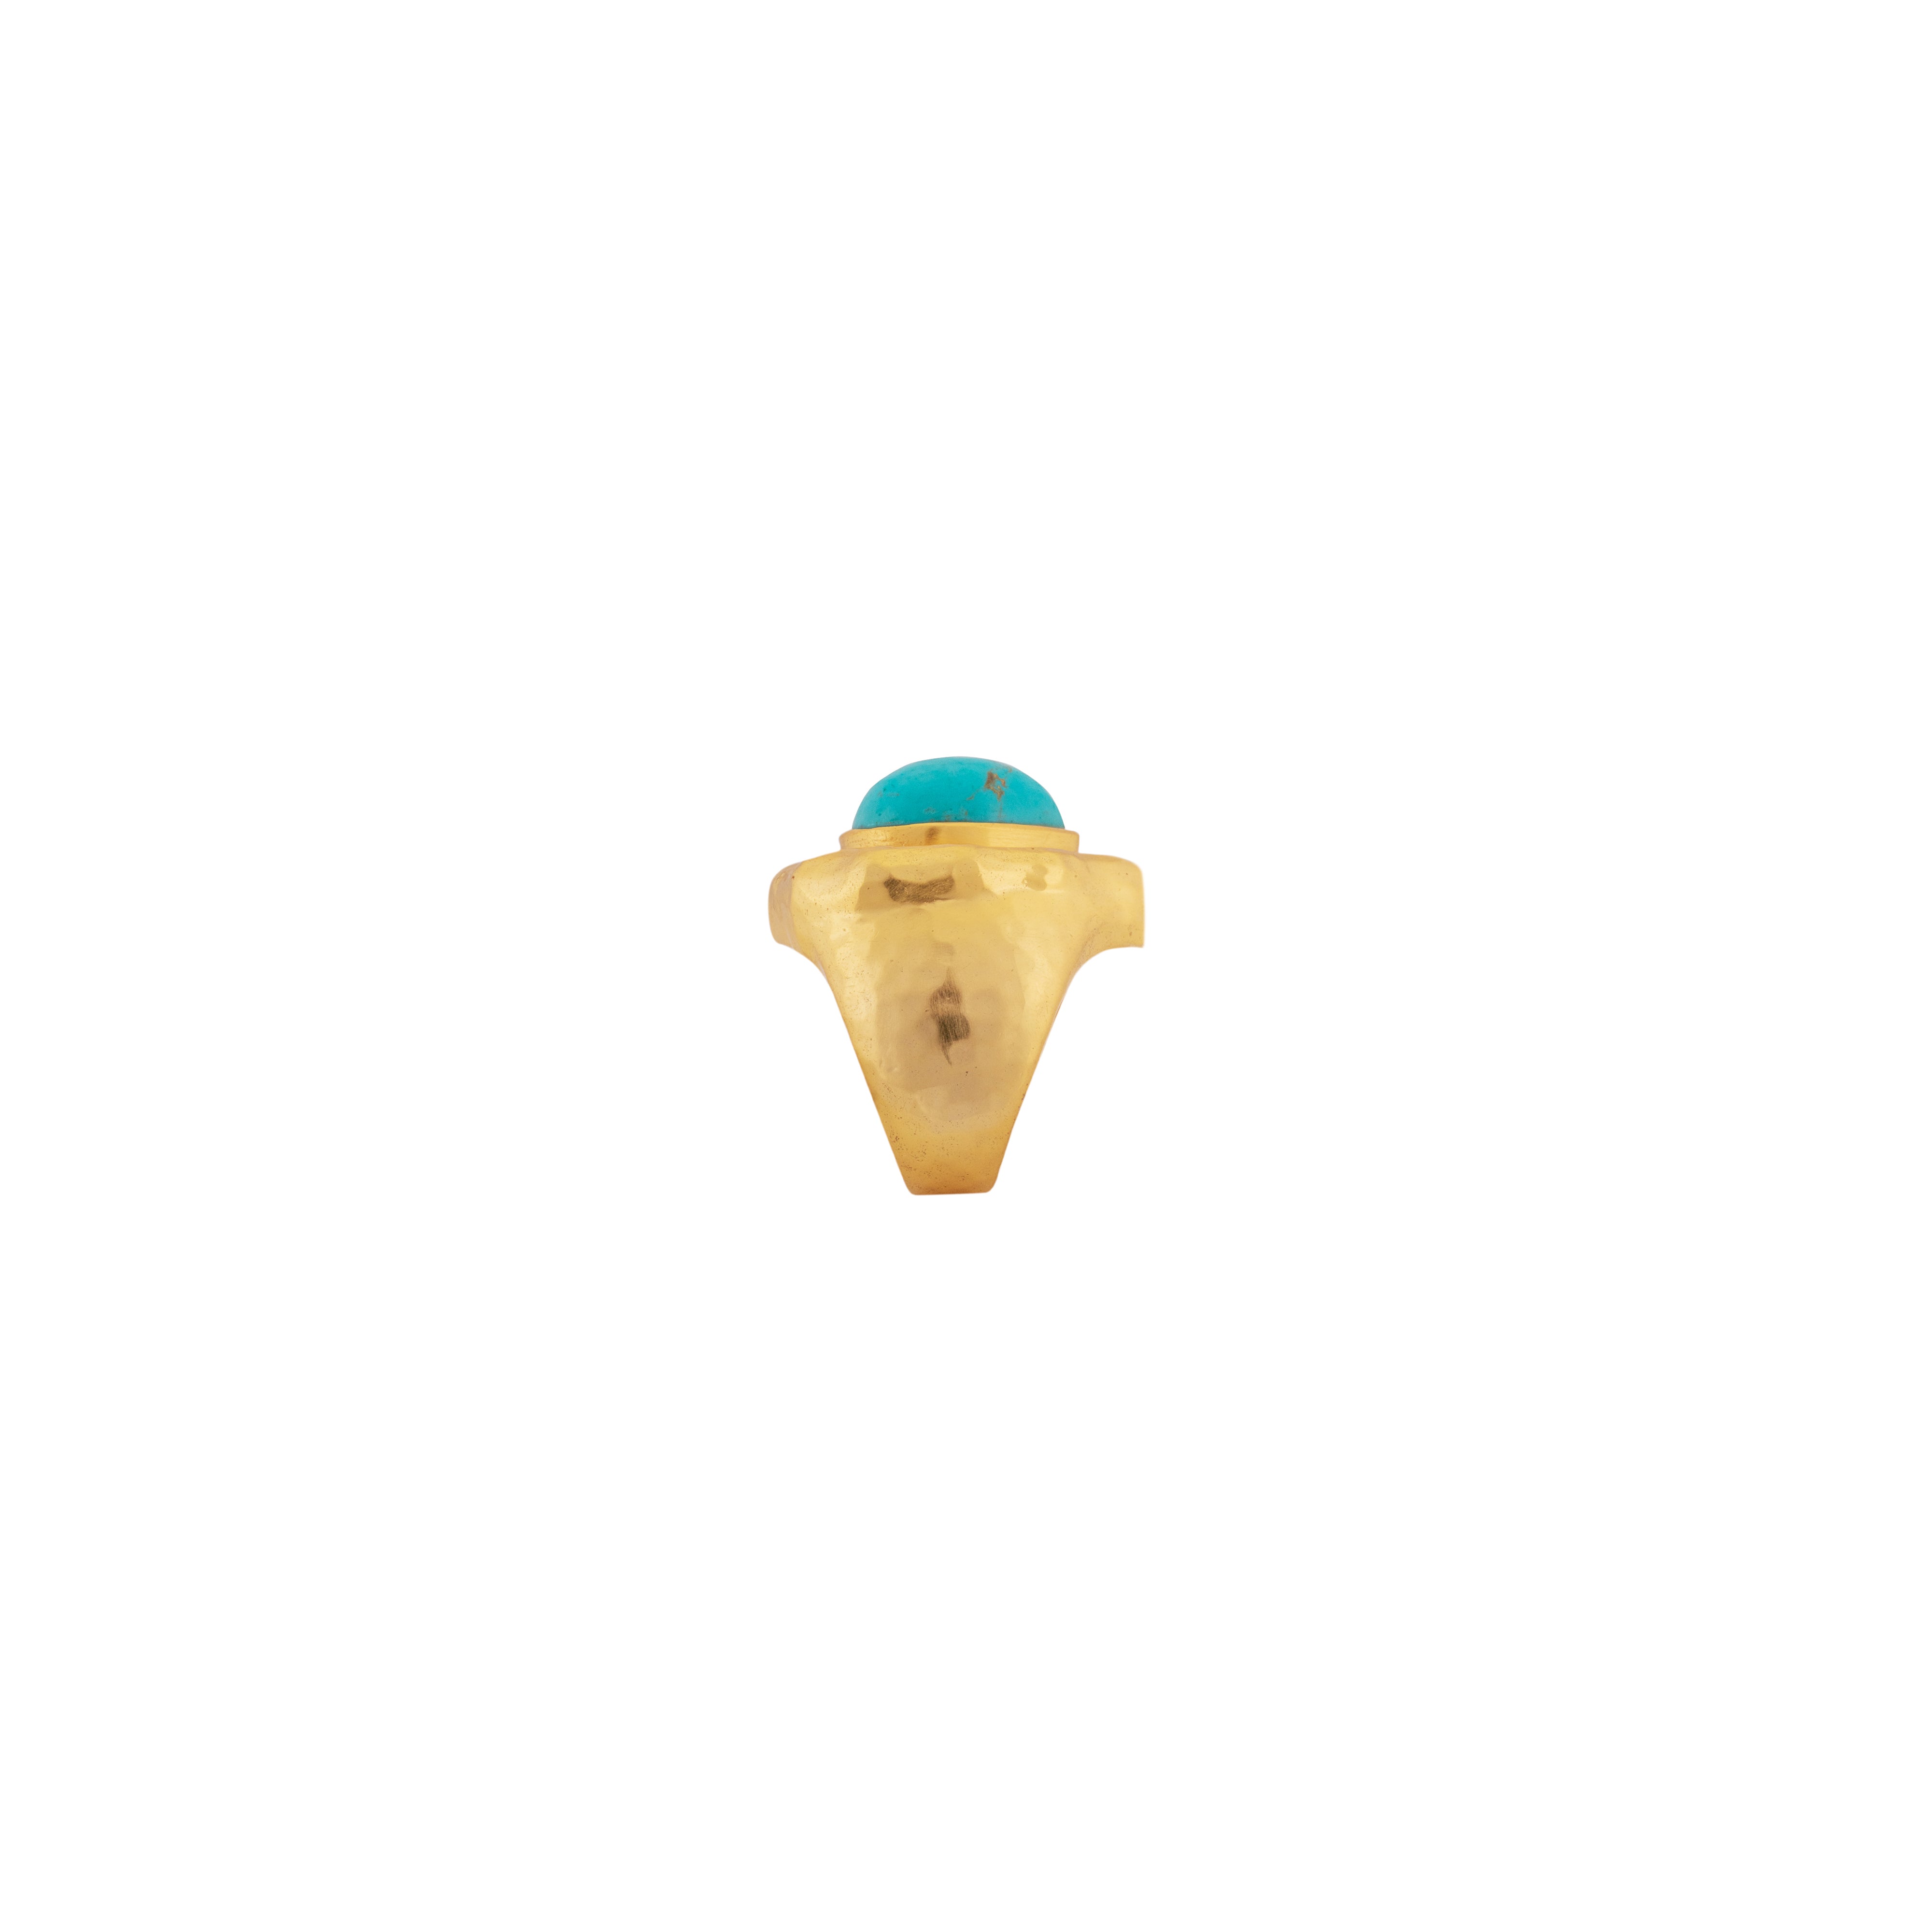 Paulina Ring Golden Turquoise